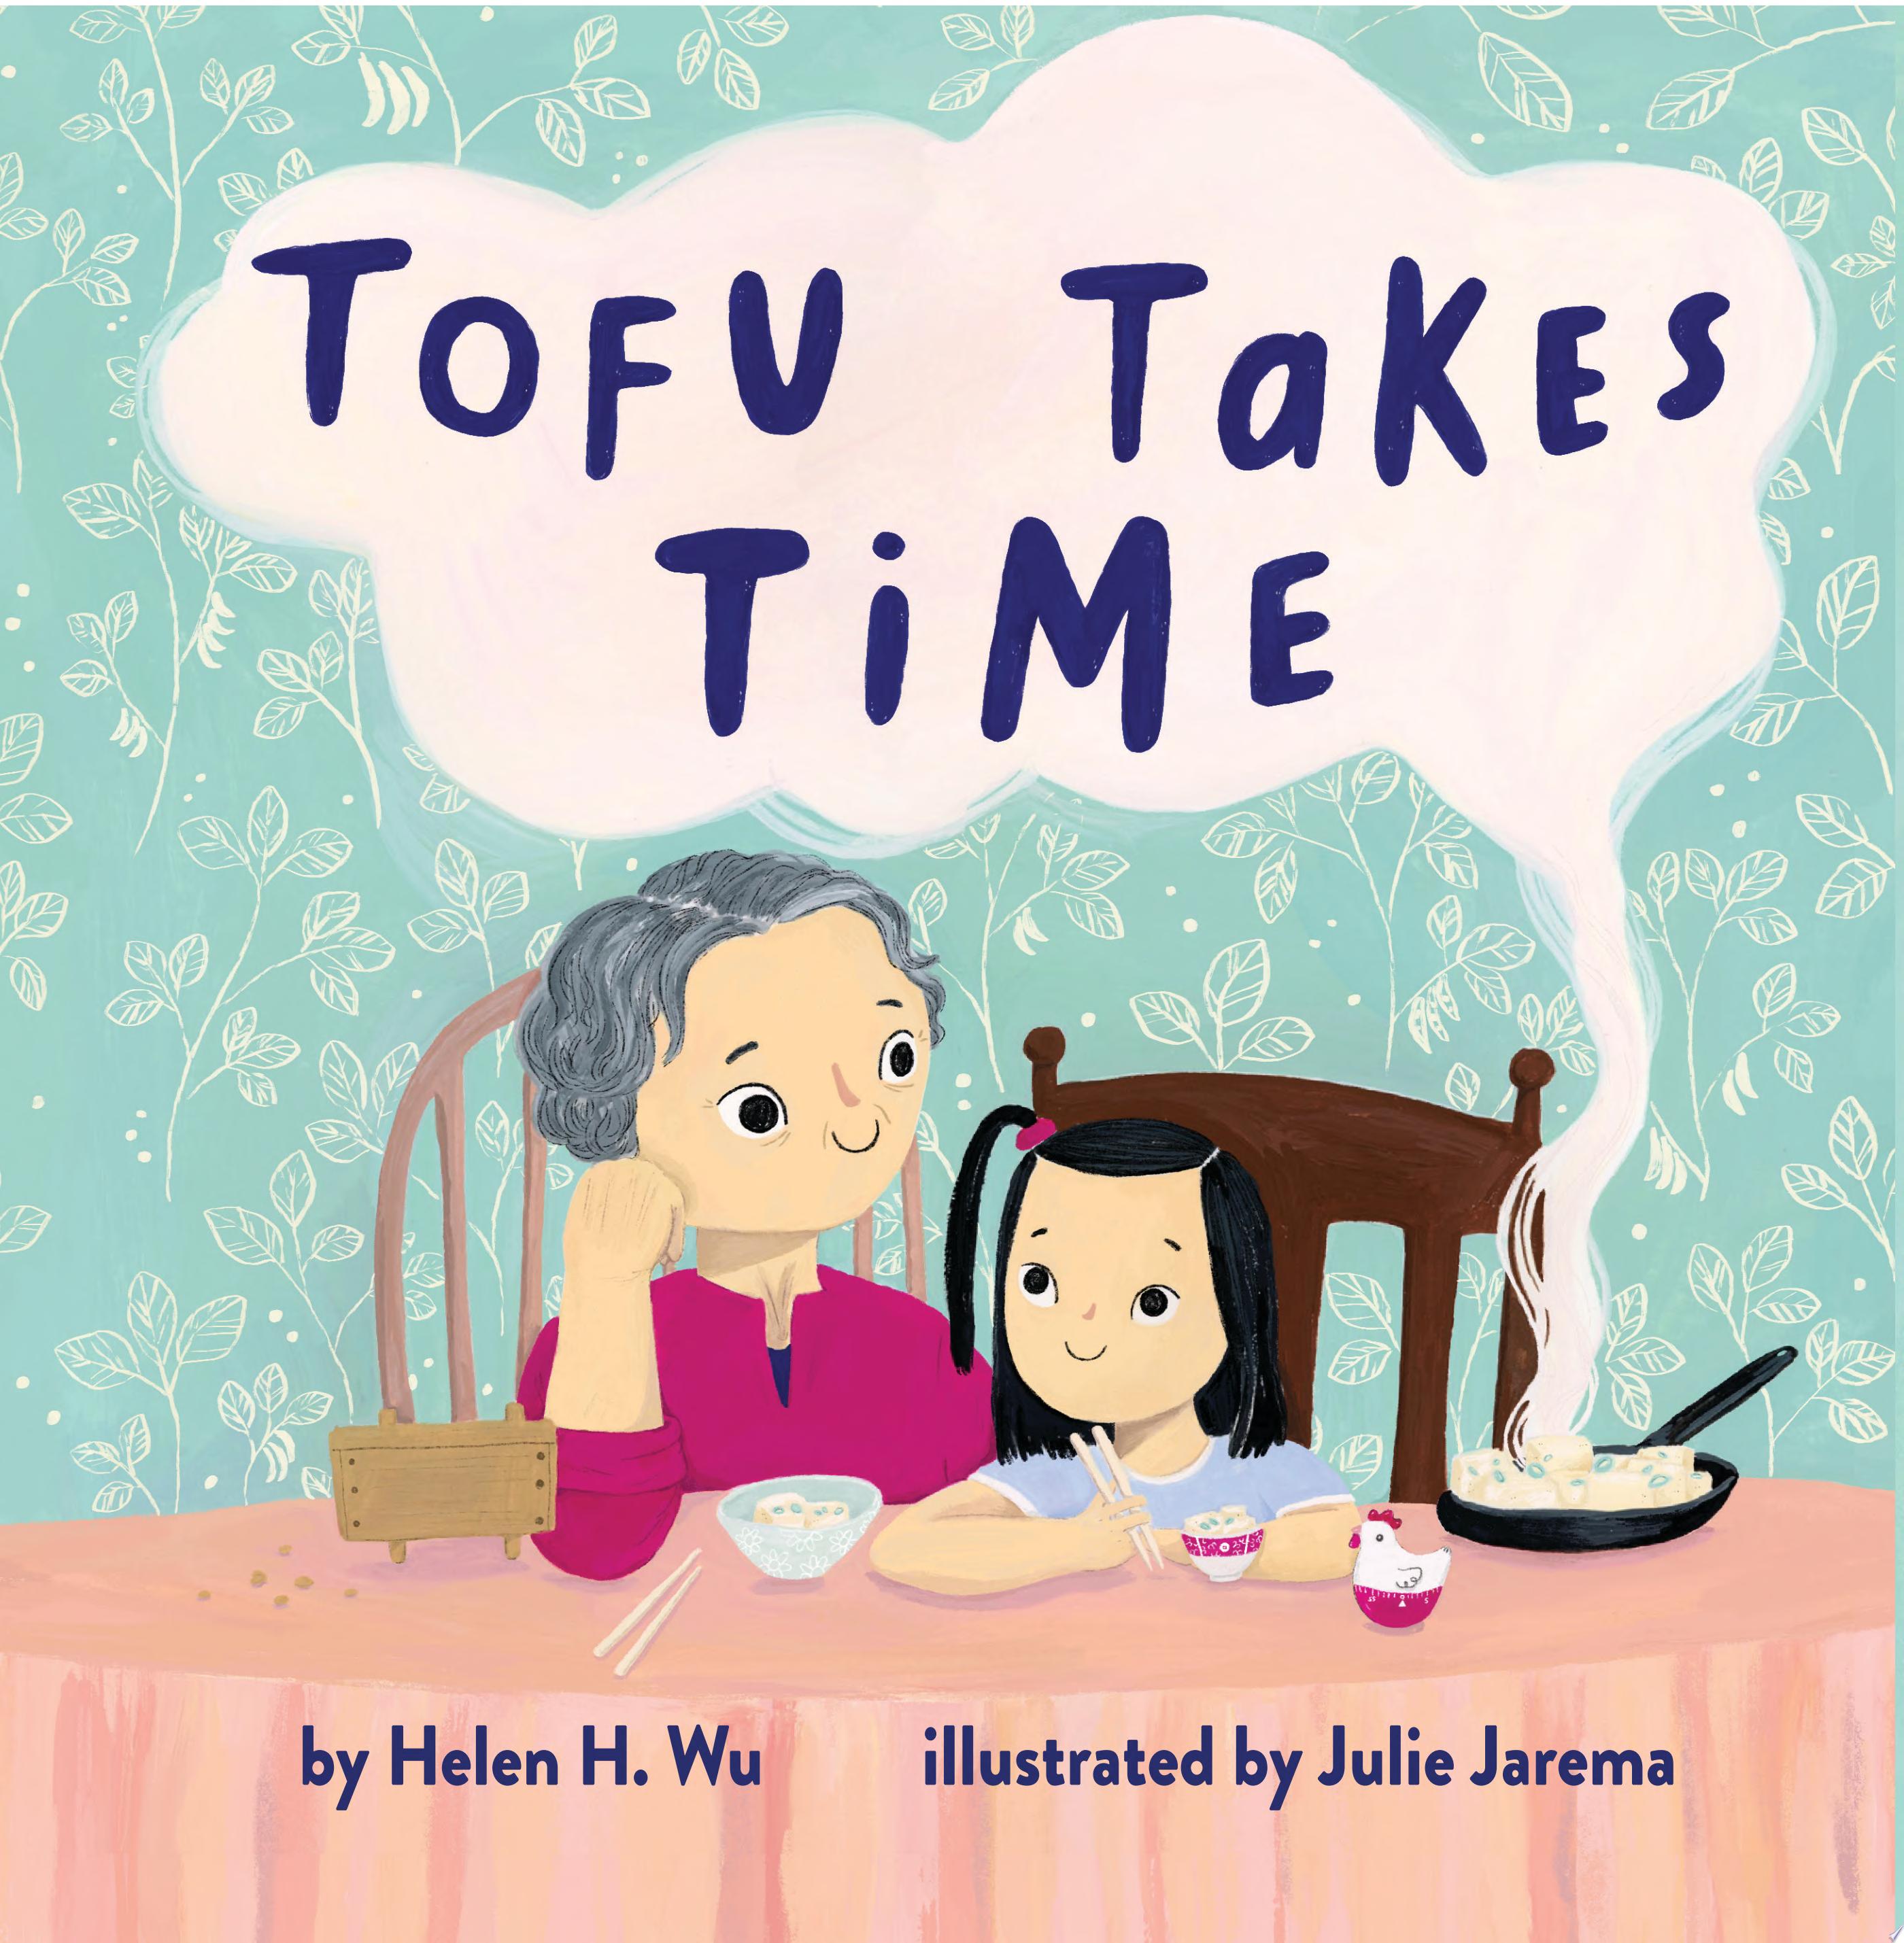 Image for "Tofu Takes Time"